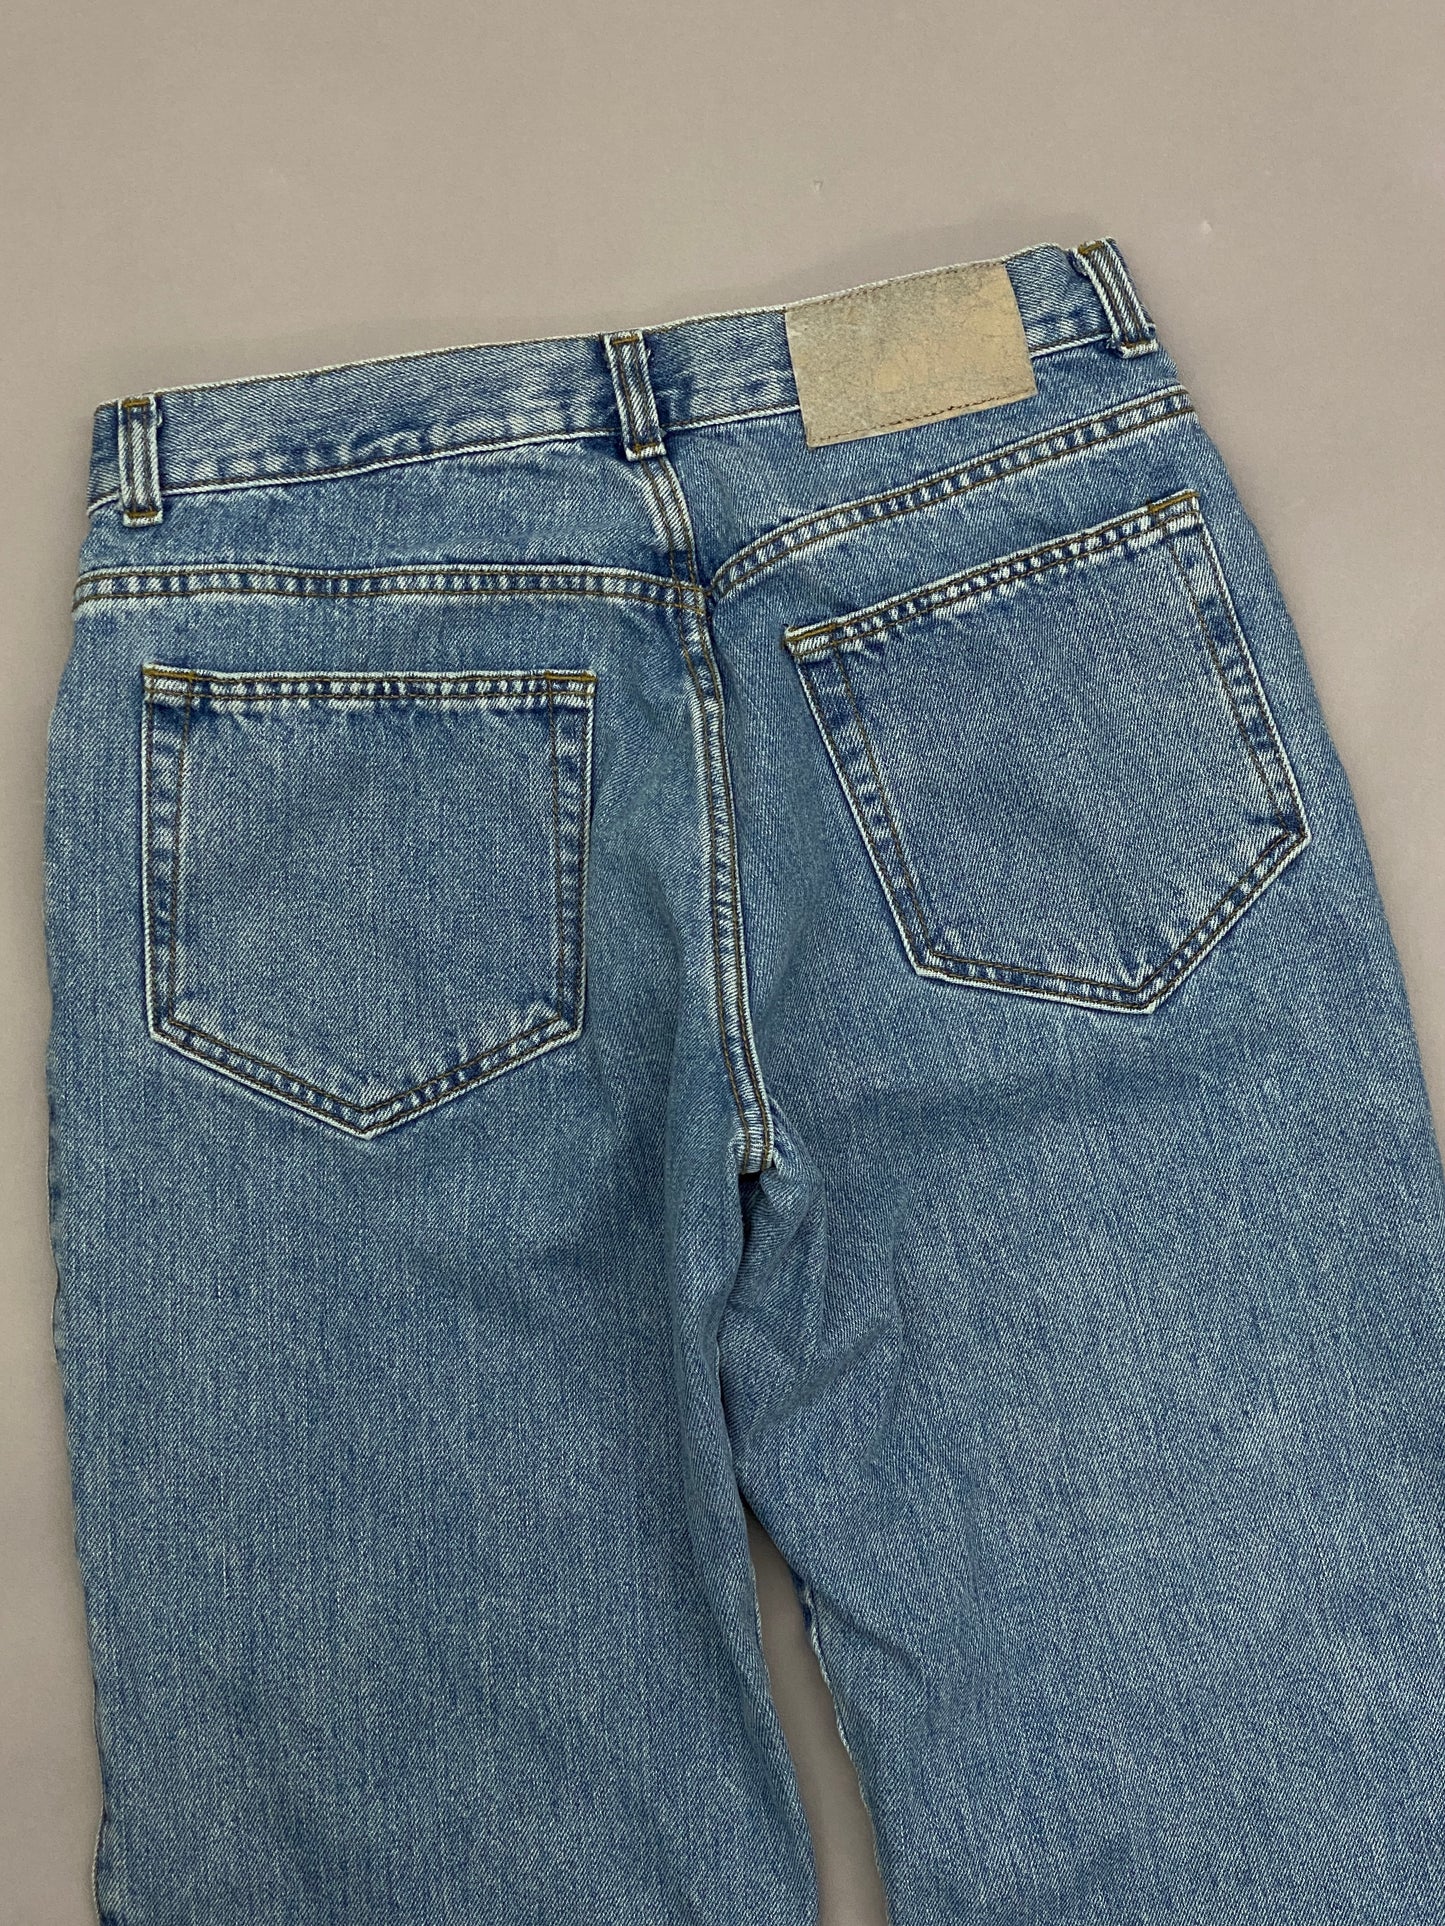 Marithe Francois Girbaud Vintage Jeans - 32 x 30